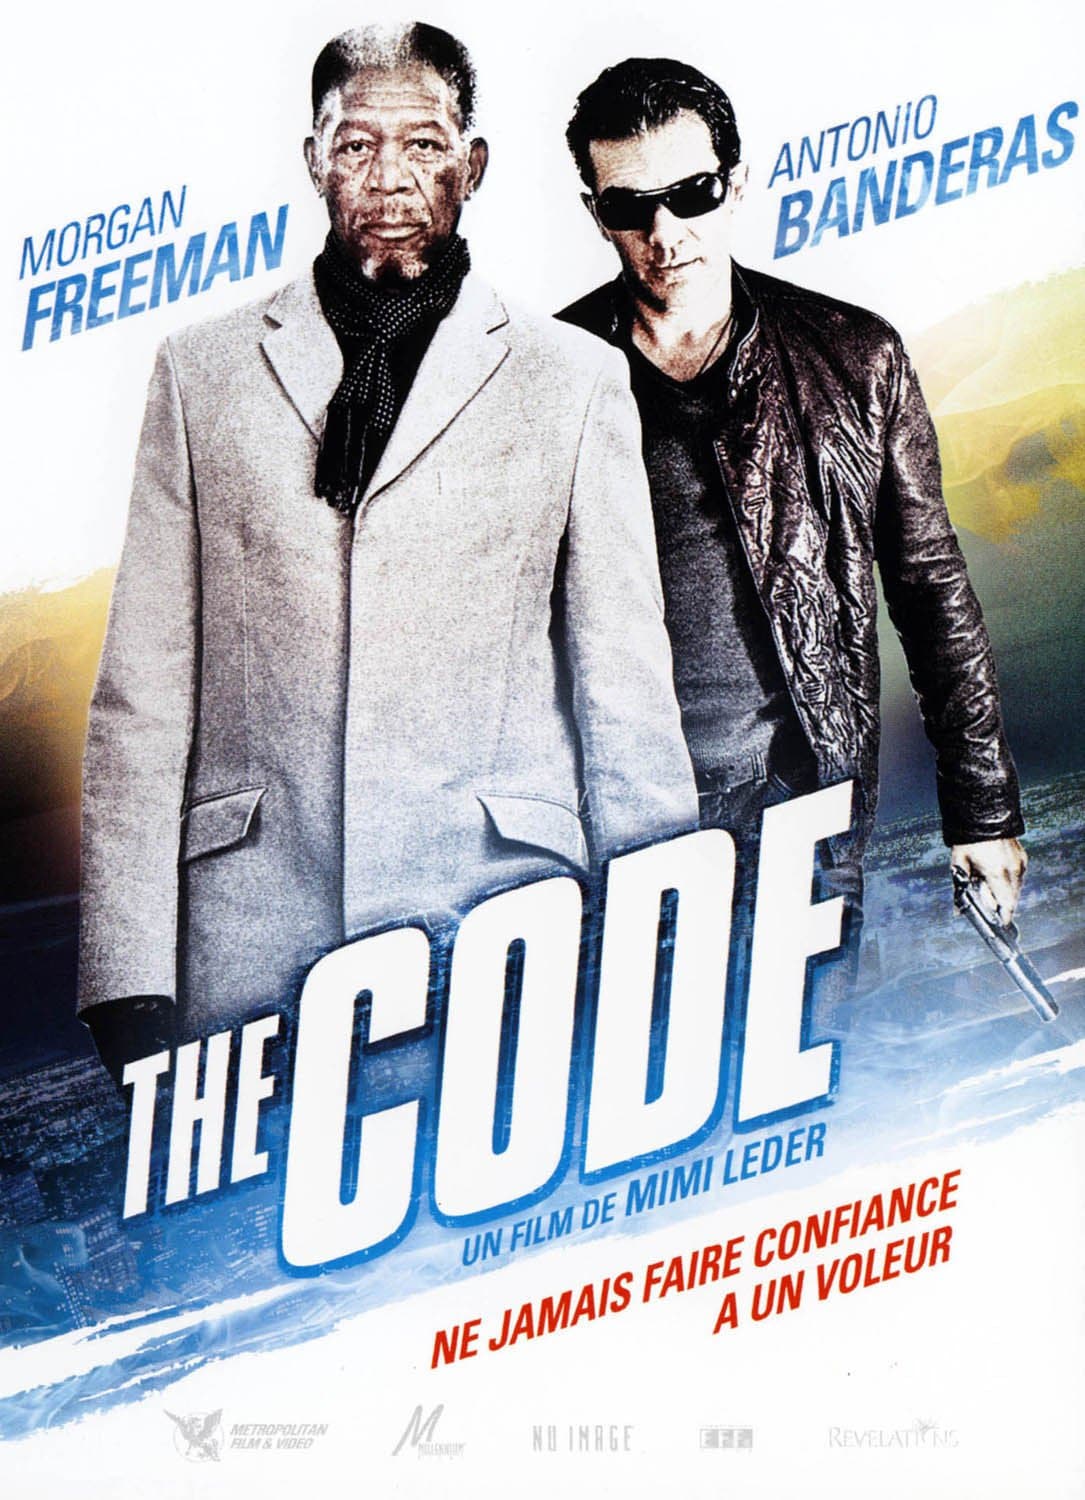 The Code - Film complet en streaming VF HD - Code Poursuite Film Complet En Français